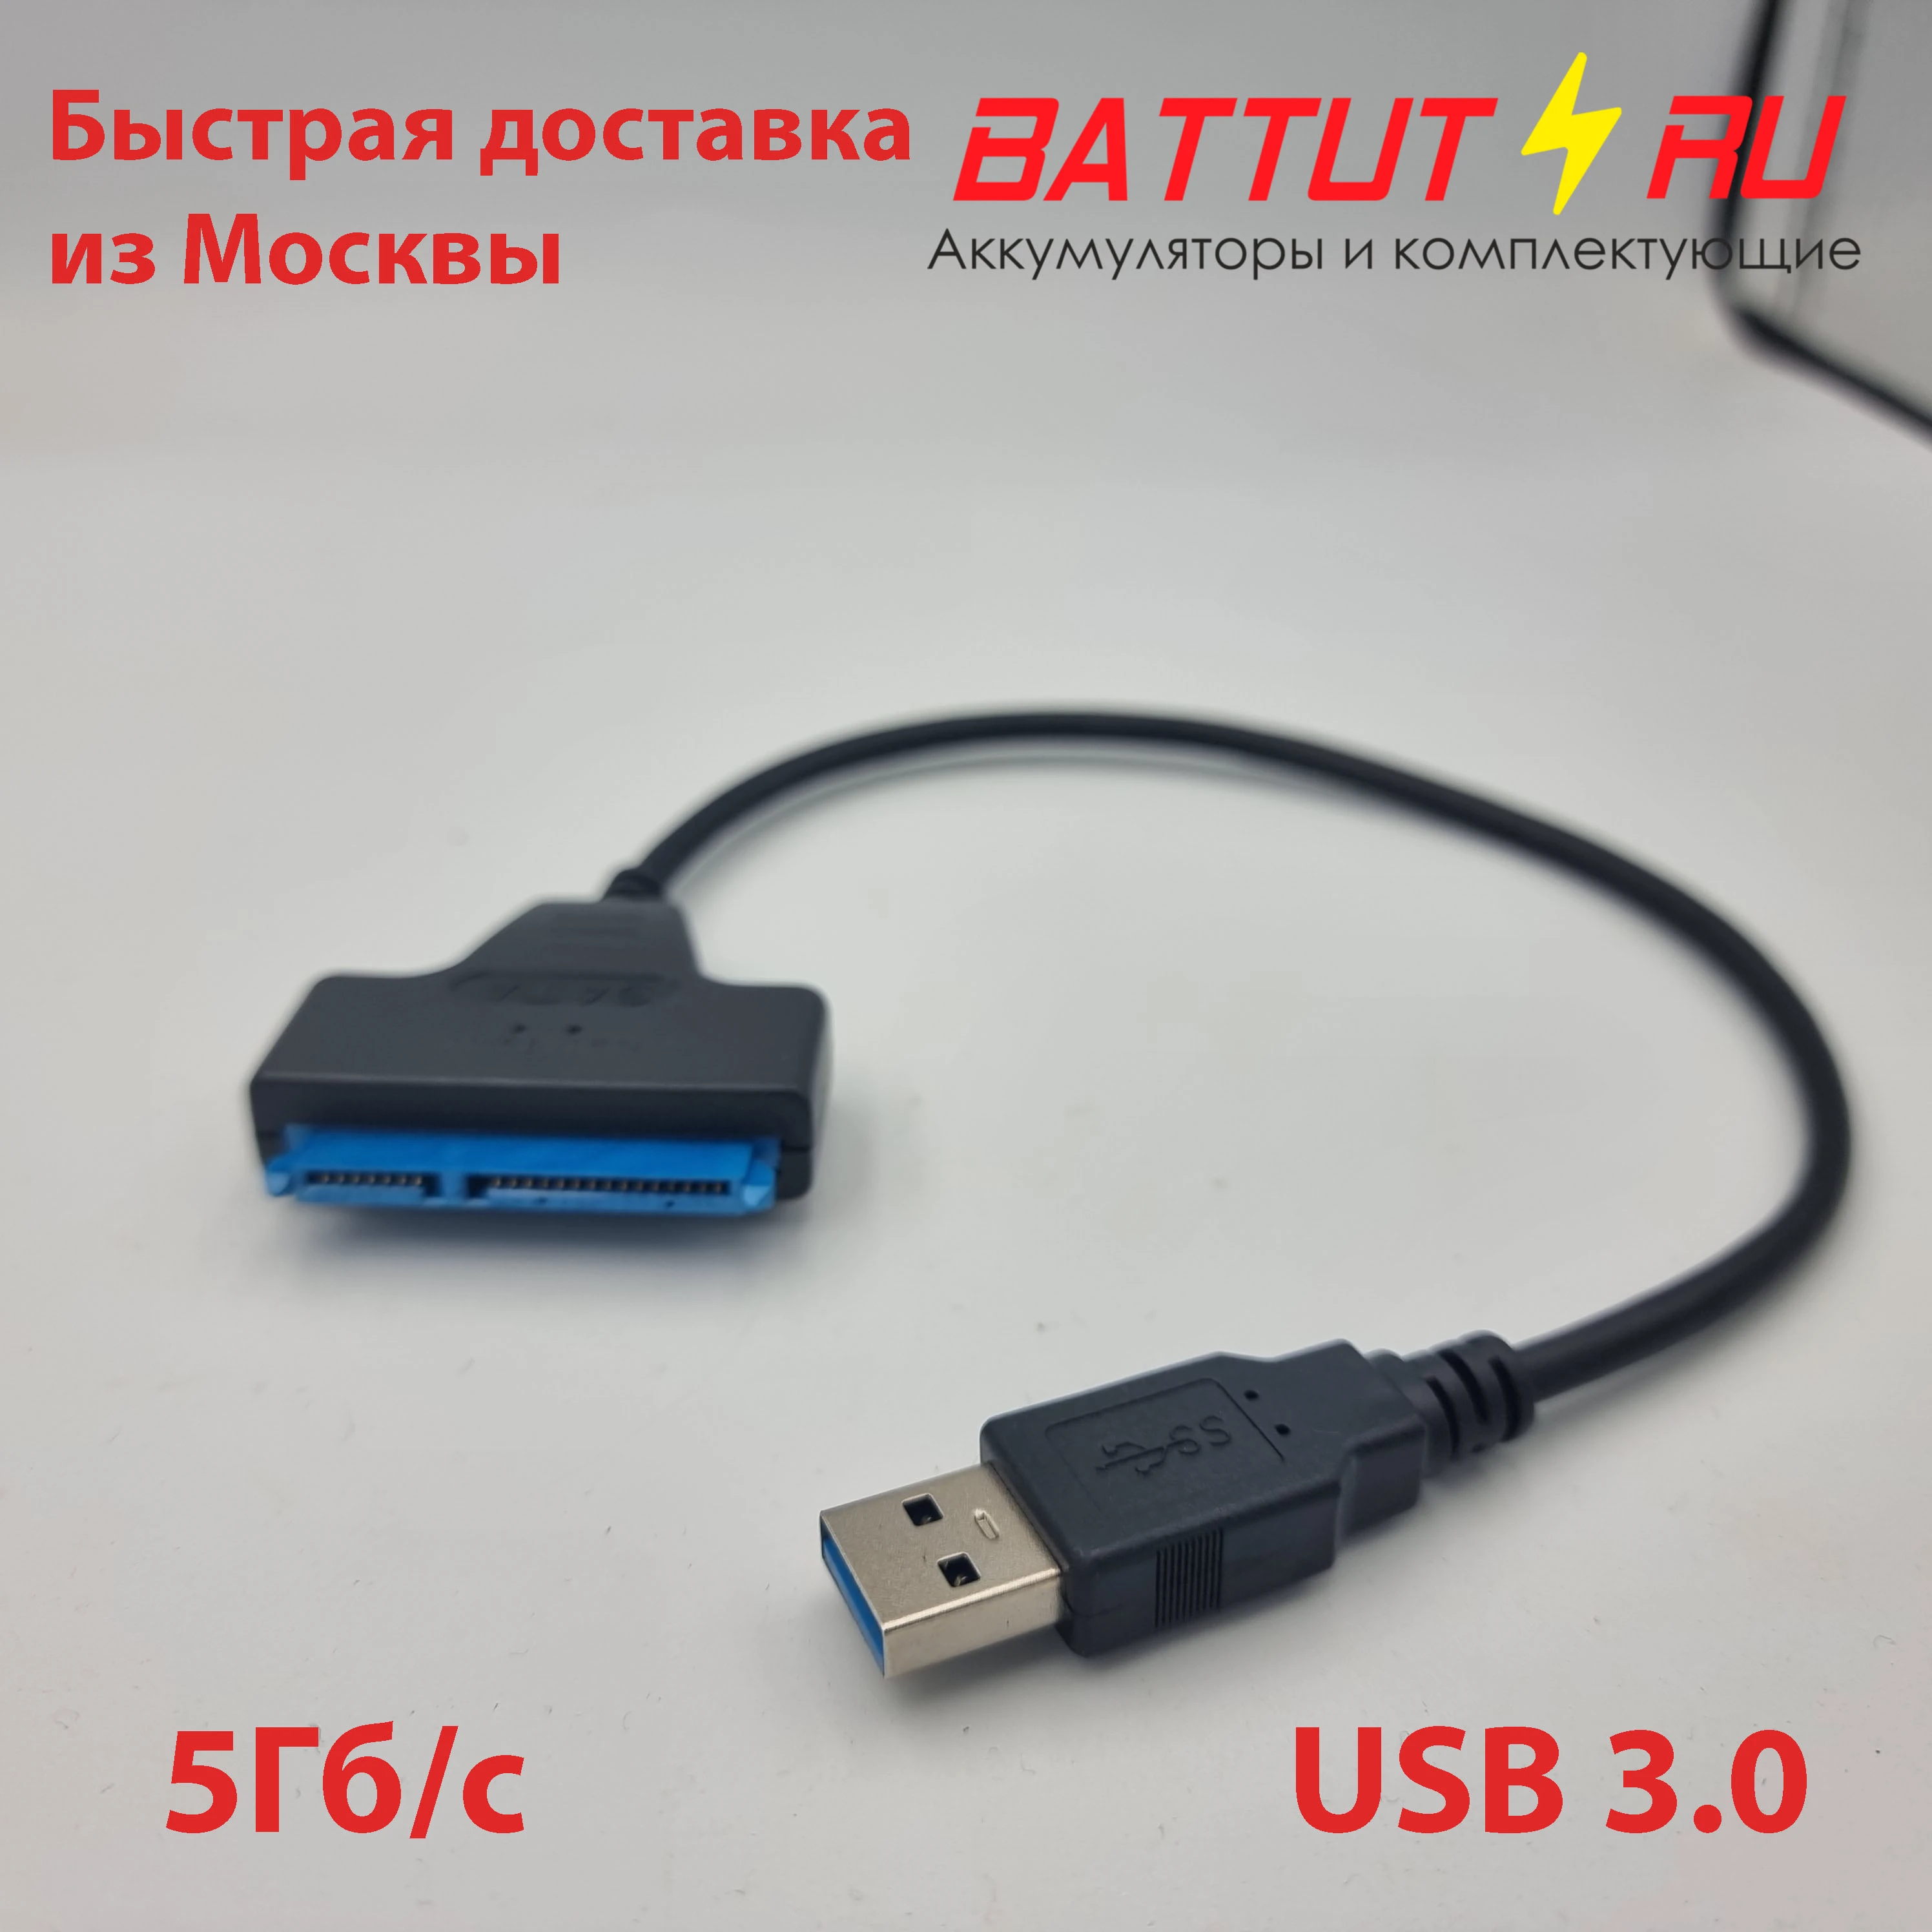 Sata to USB 3.0 adapter, HDD (SATA to USB adapter, USB to SATA) cable